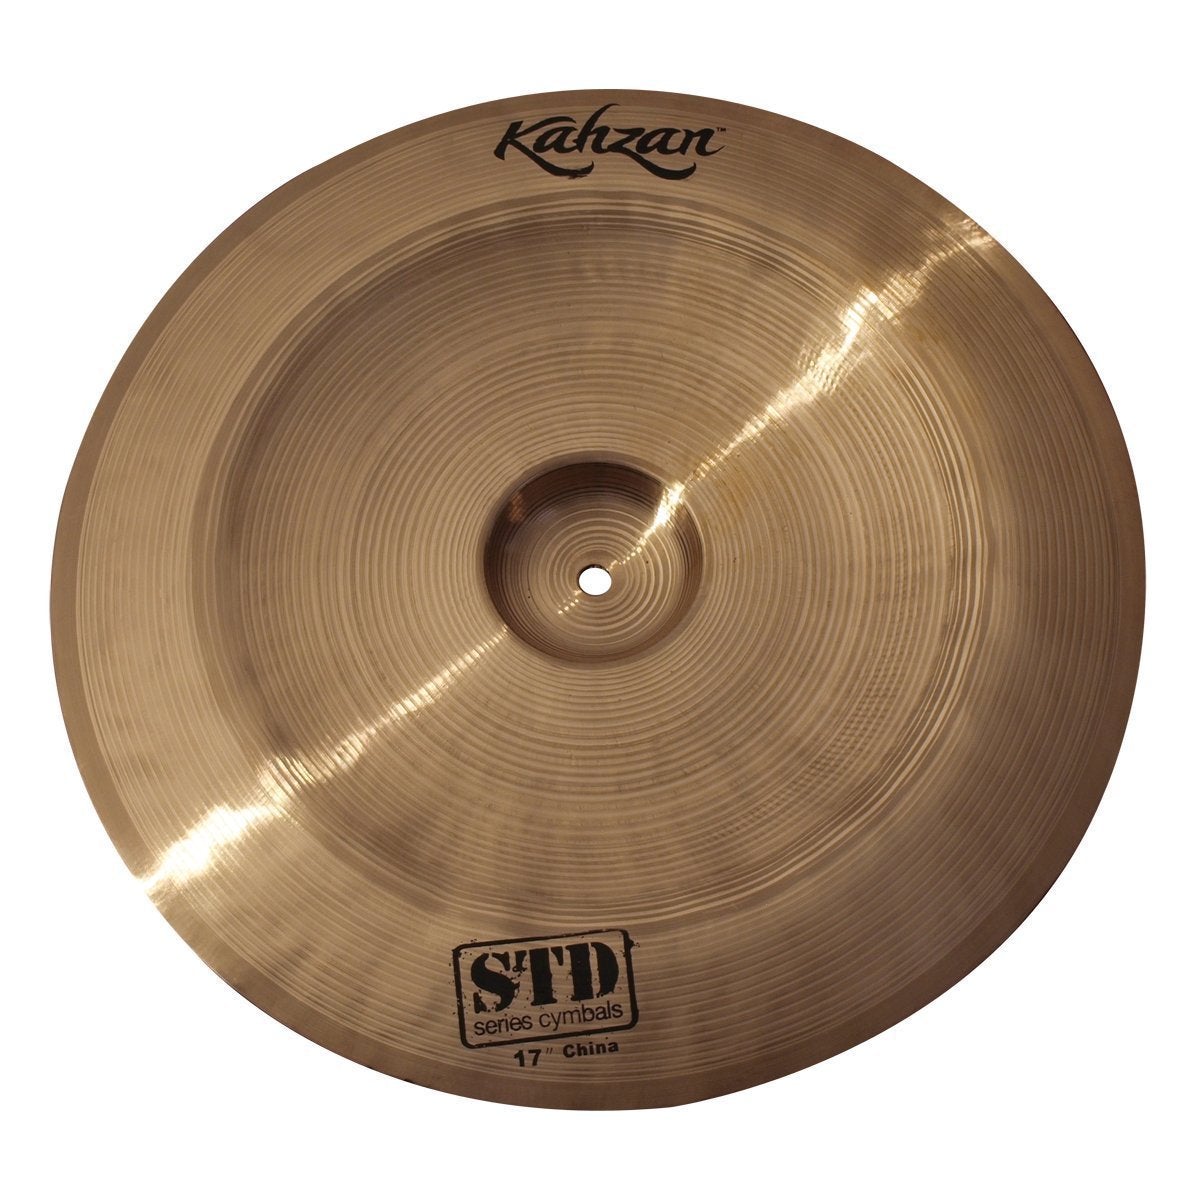 Kahzan 'STD Series' China Cymbal (17")-KC-STD-CH17